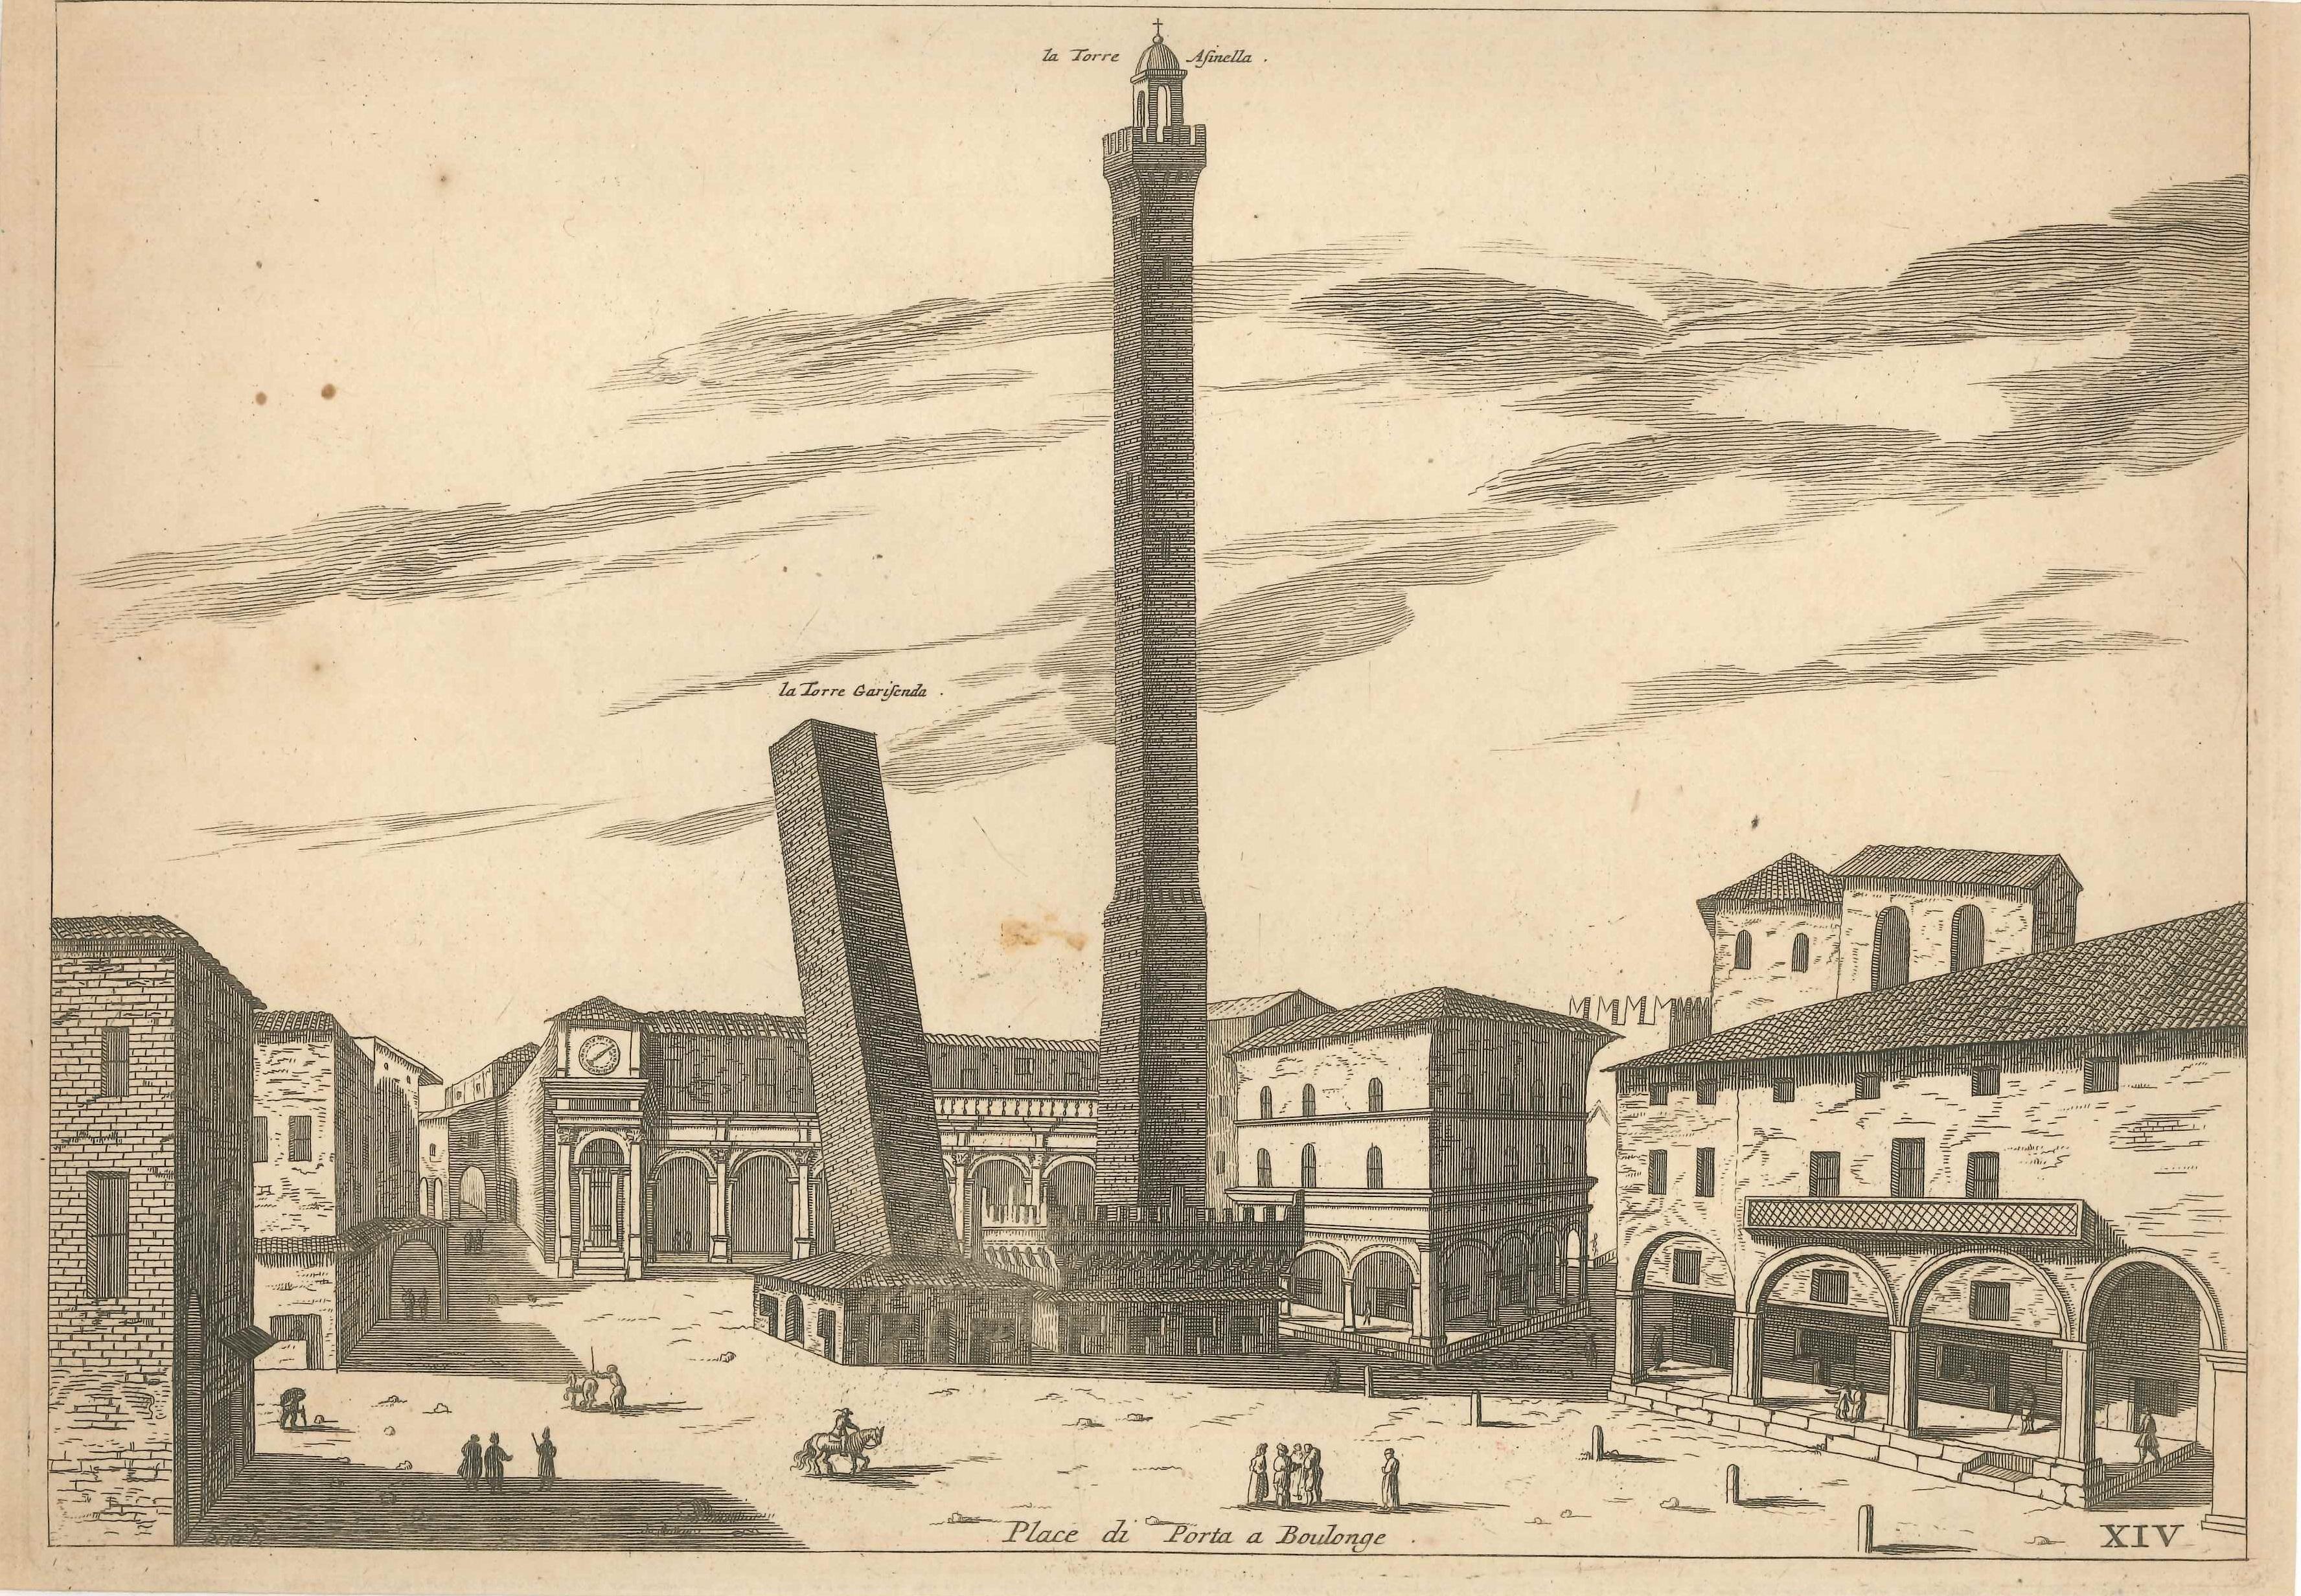 Figurative Print Giovan Battista Falda - Place di Porta a Boulogne -  Gravure d'origine de G.B. Falda, édition limitée